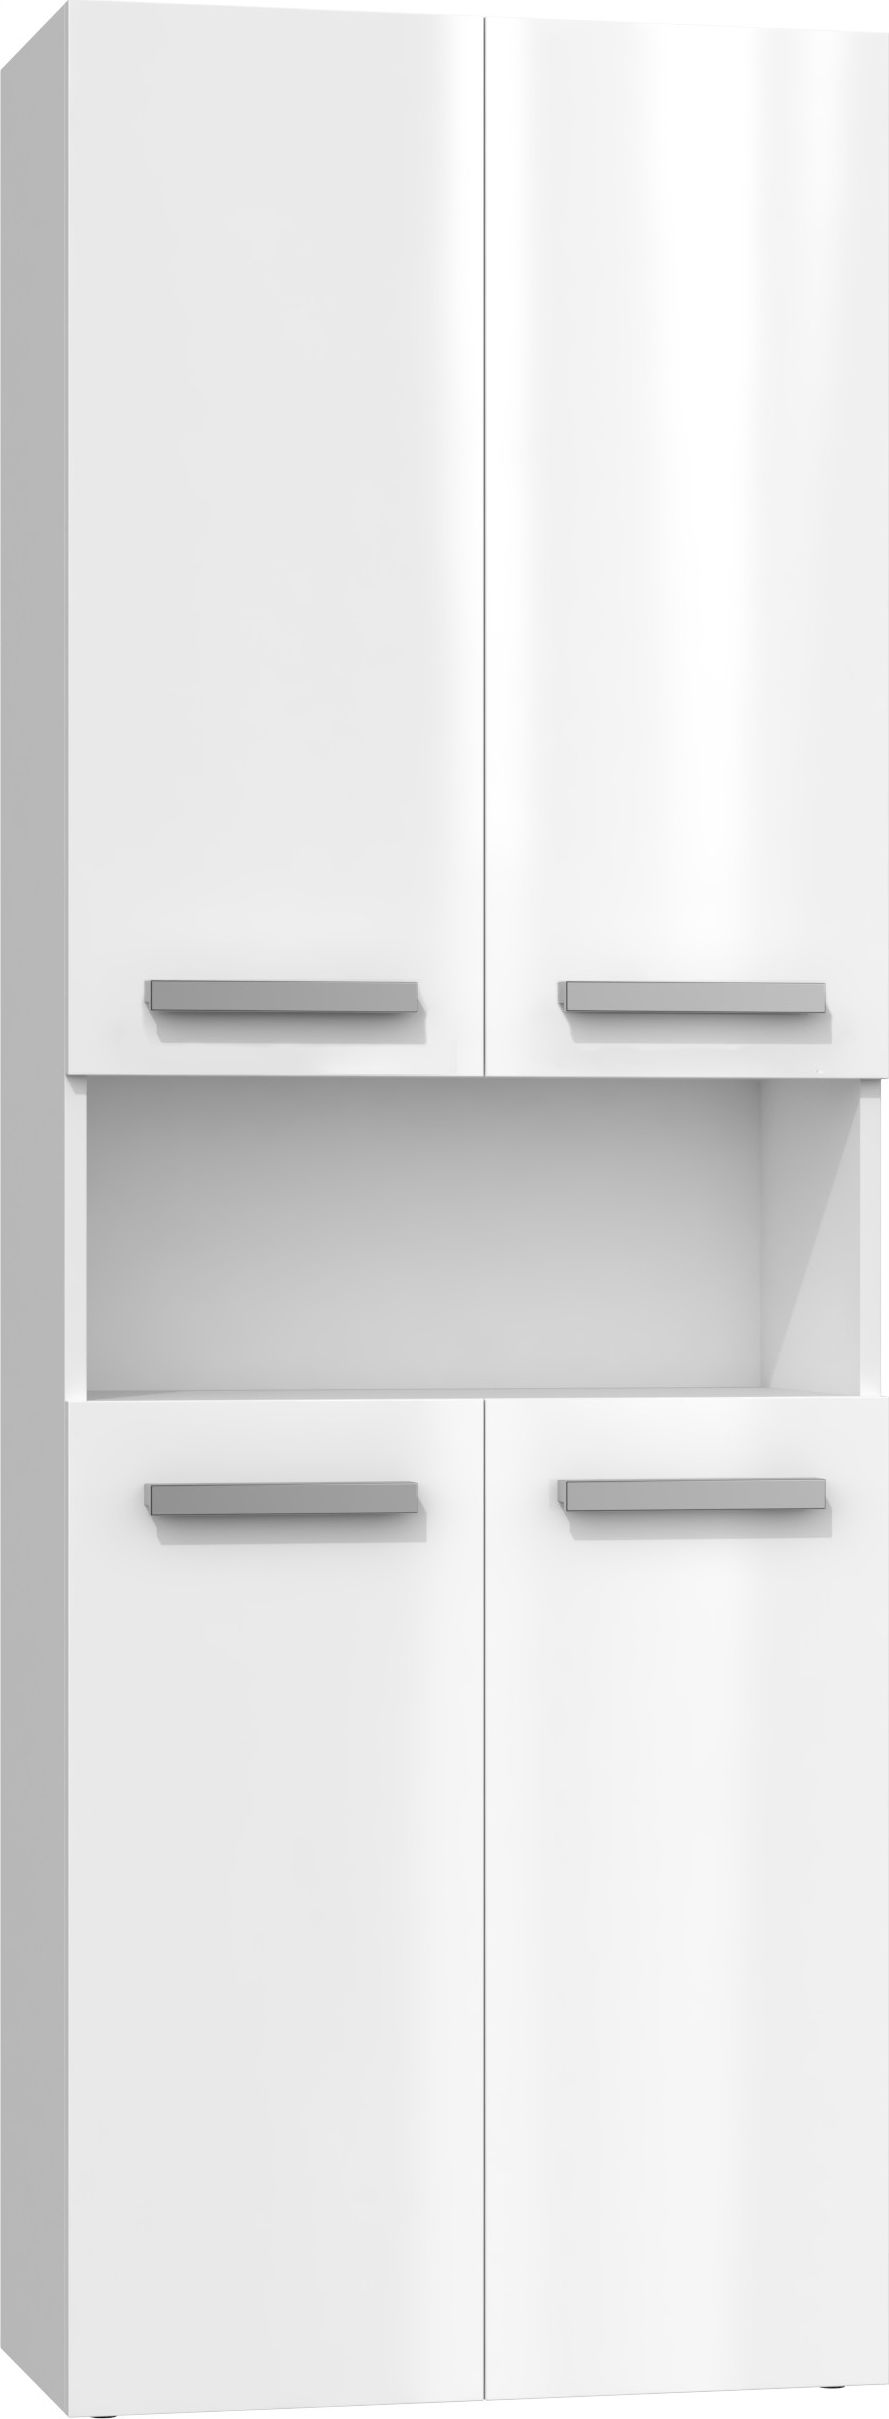 Topeshop NEL 1K DK BPOL bathroom storage cabinet White